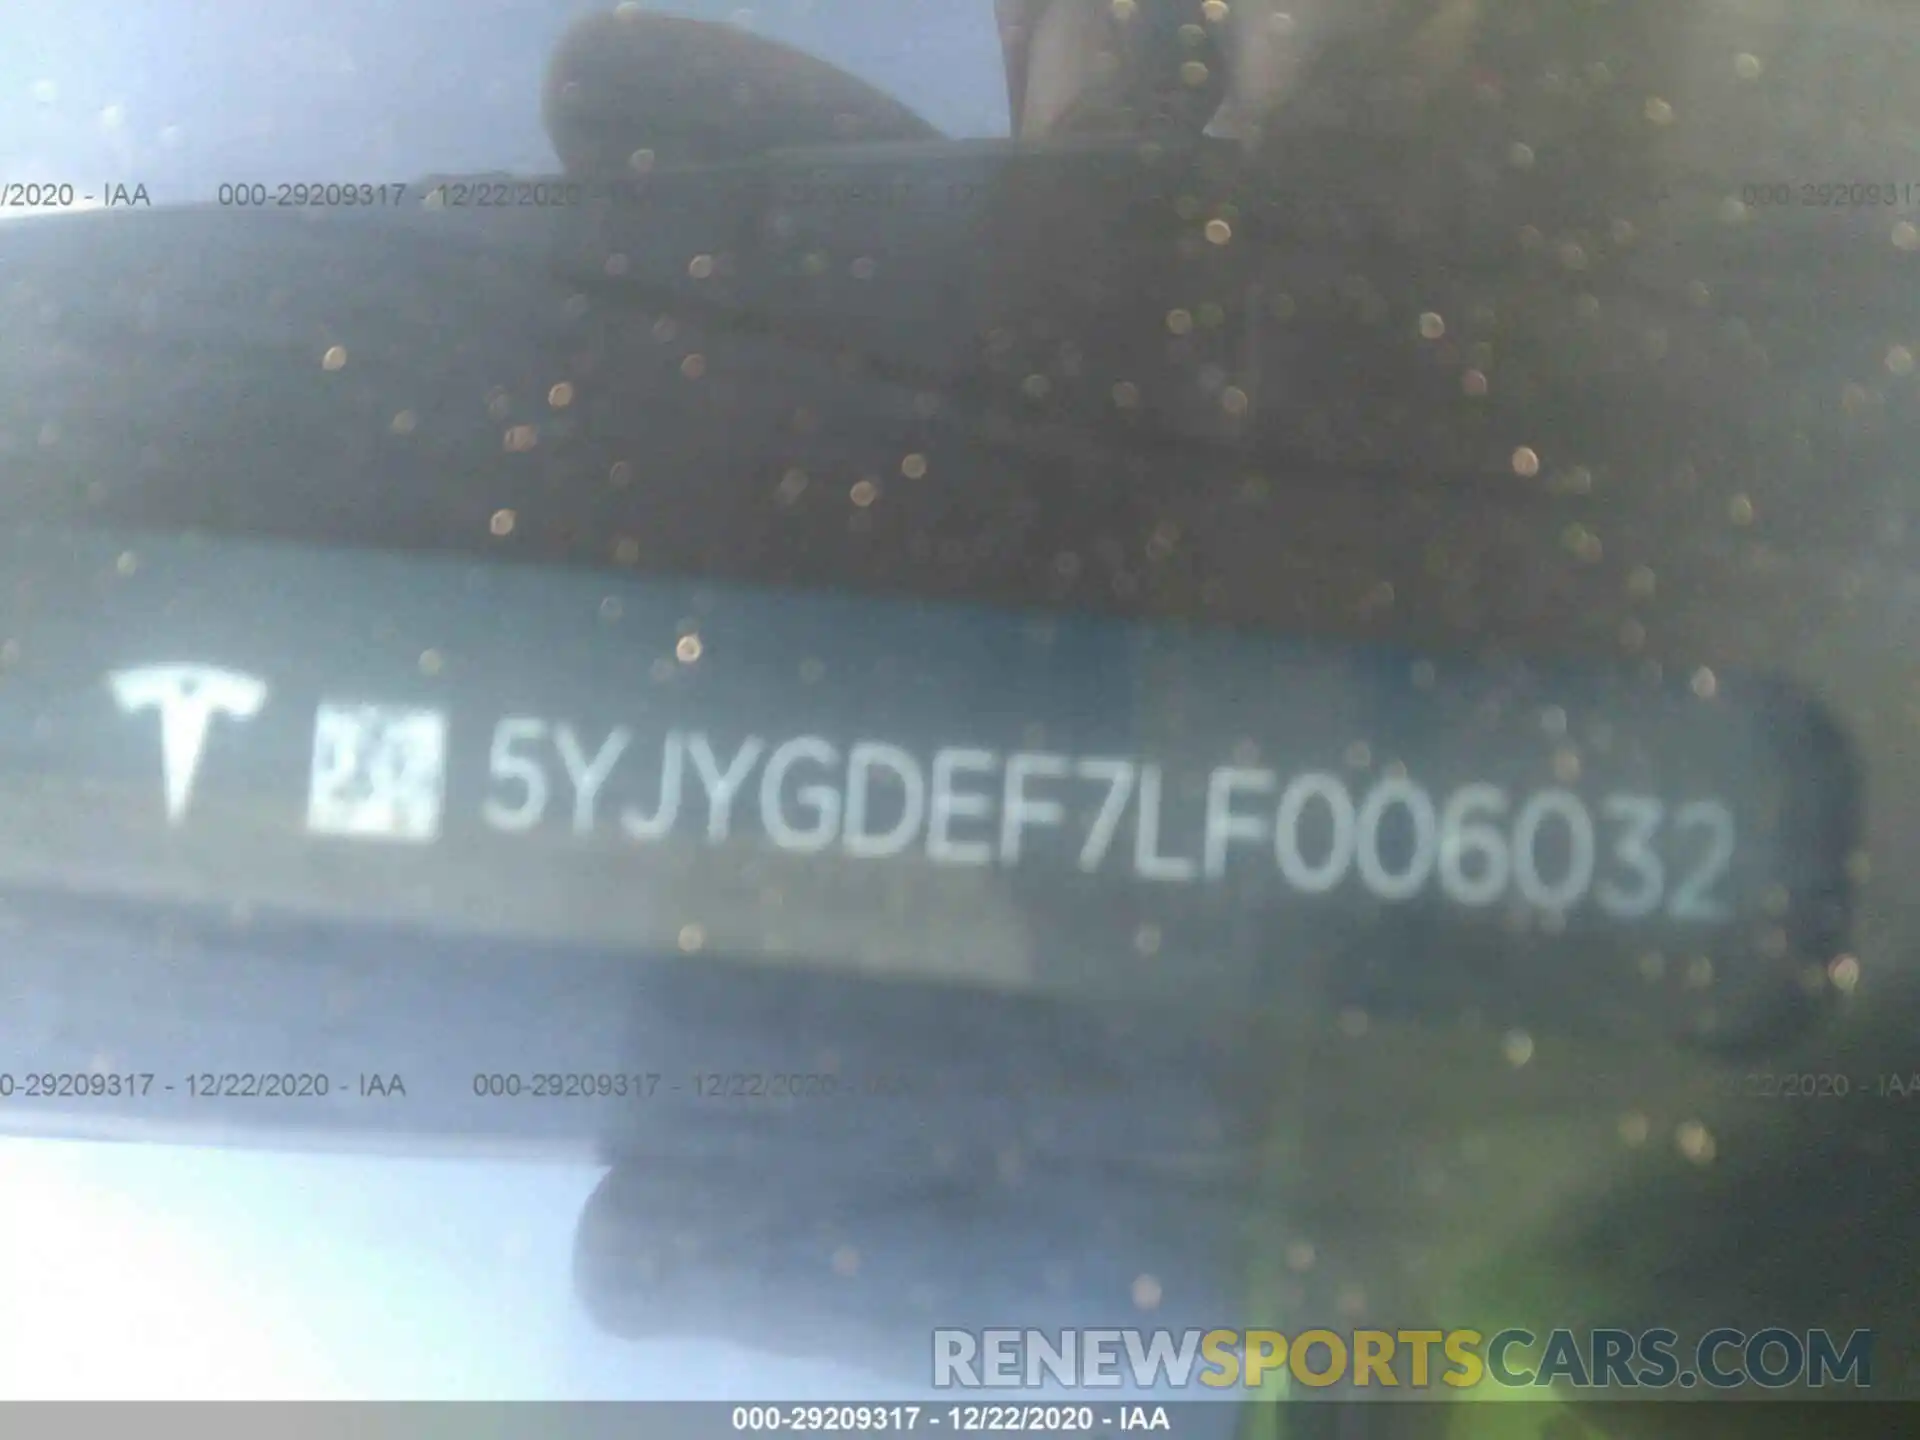 9 Photograph of a damaged car 5YJYGDEF7LF006032 TESLA MODEL Y 2020